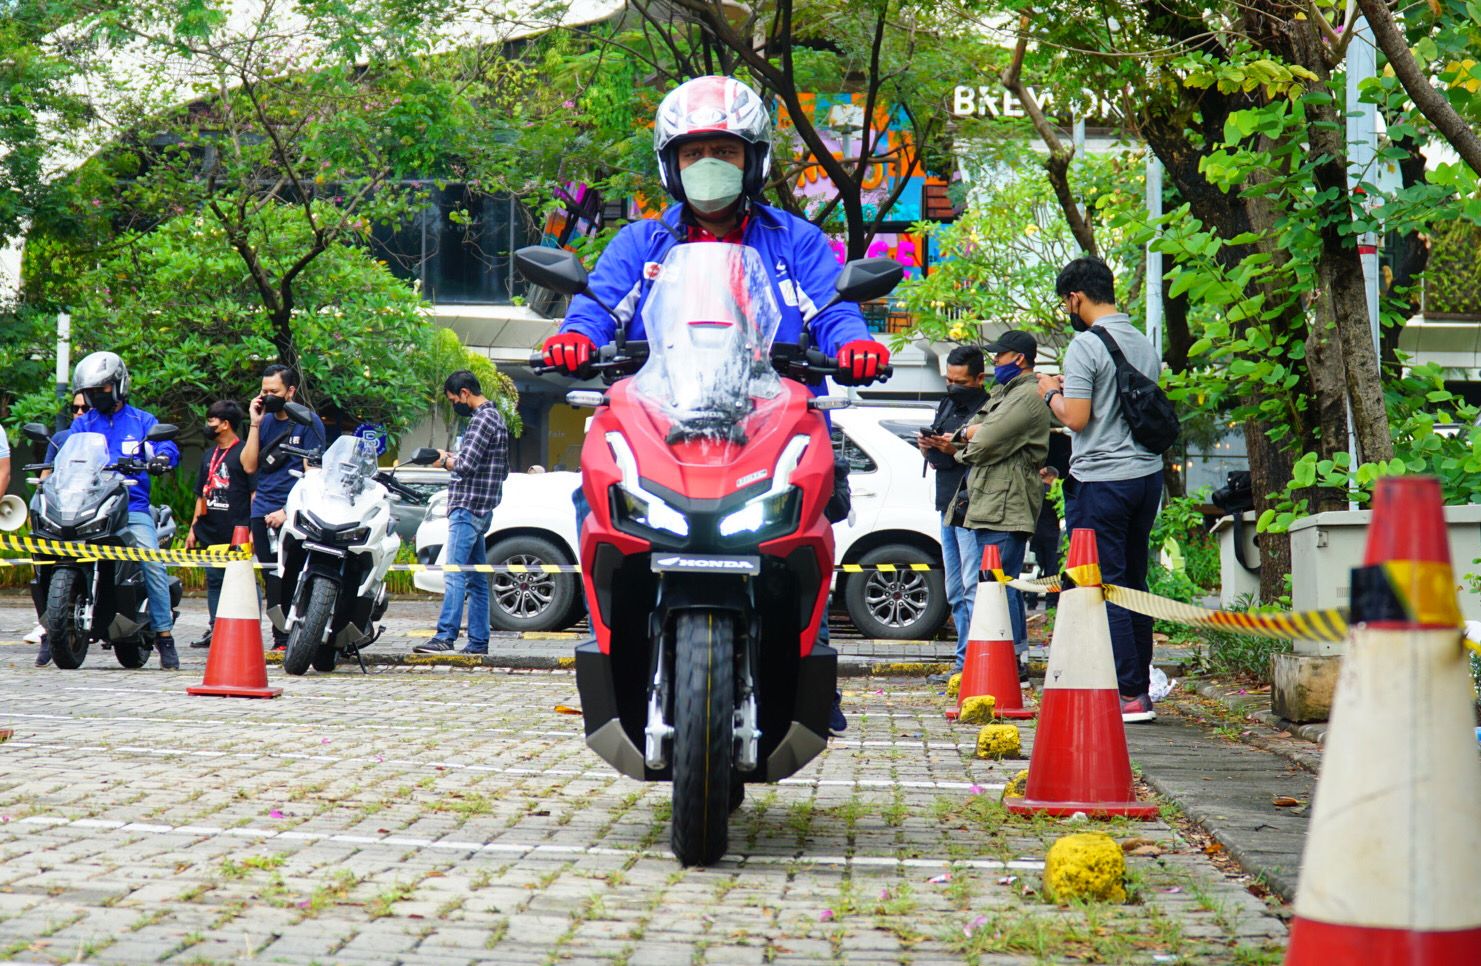 Skutik penjelajah New Honda ADV160, telah dipercaya oleh lebih dari 30 ribu konsumen di Jawa Barat.